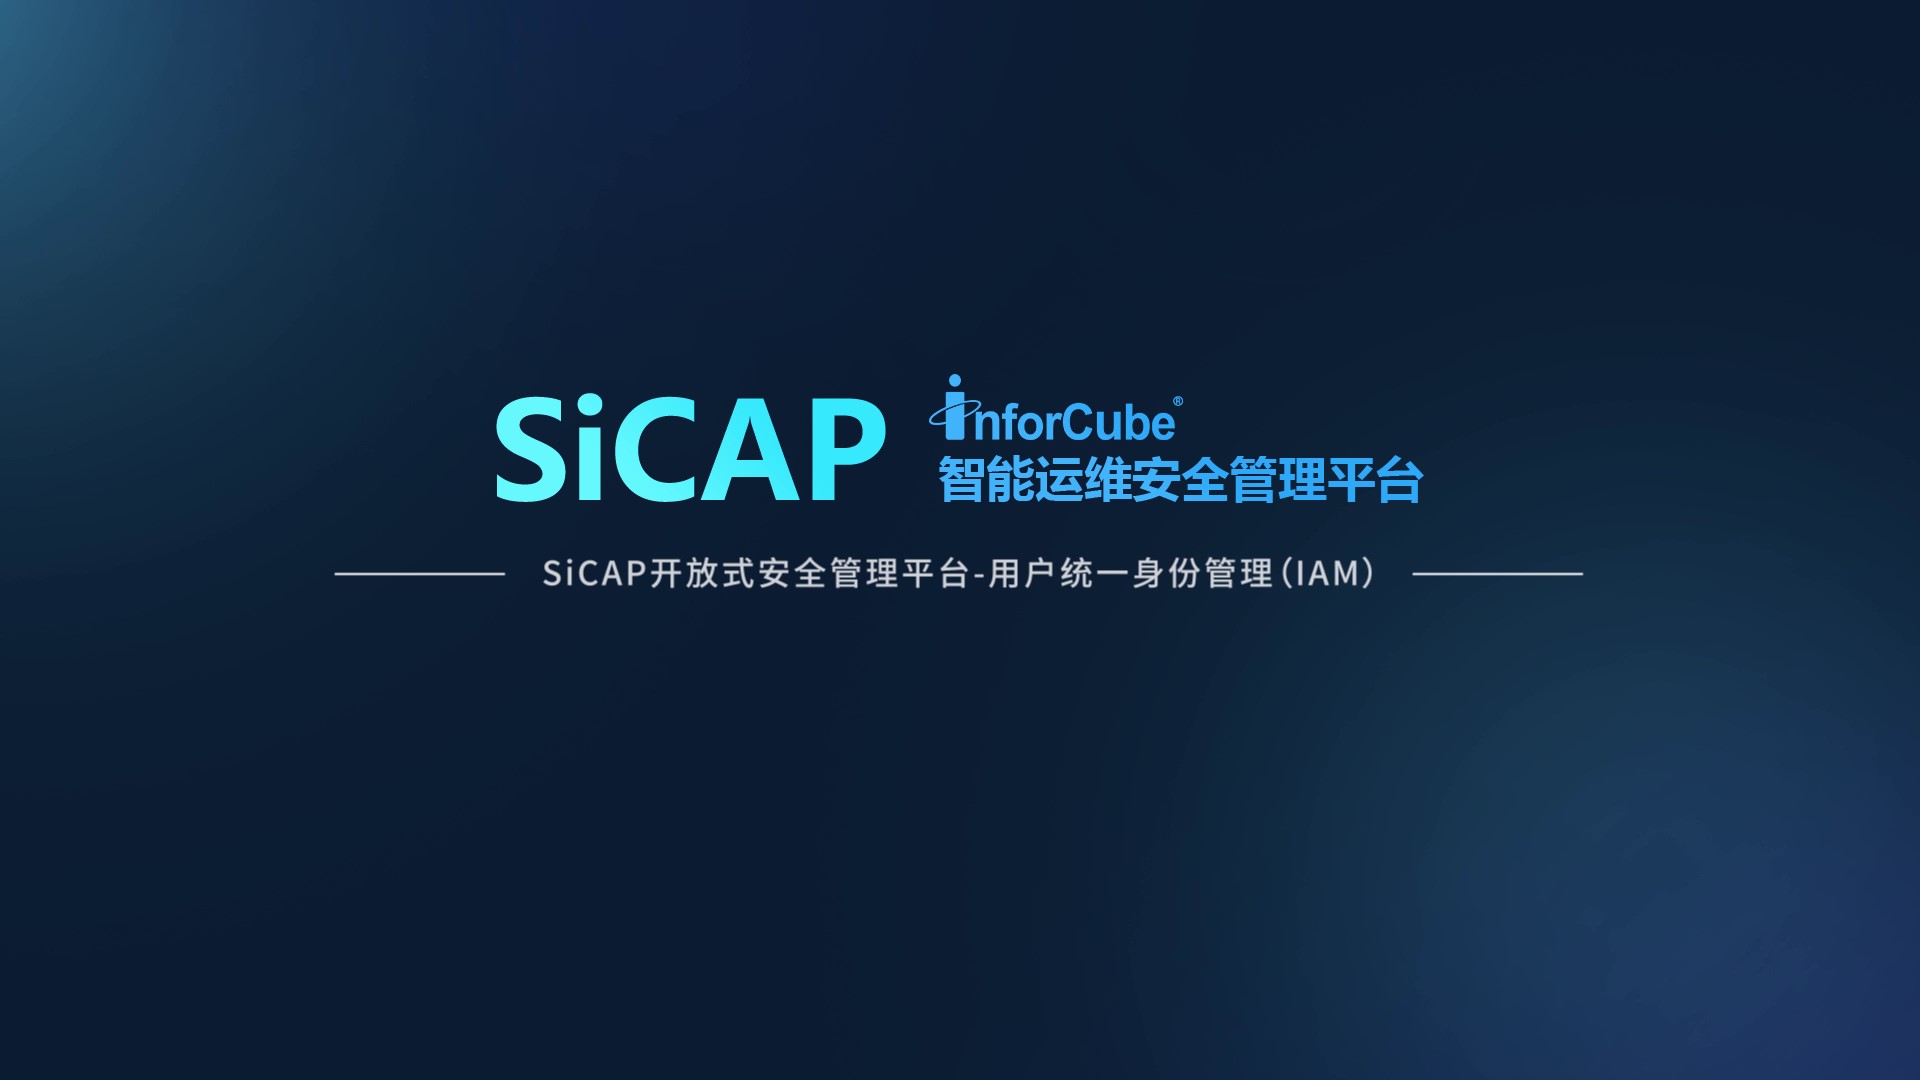 SiCAP開(kāi)放(fàng)式安全管理平台-統一(yī)用戶身份管理 IAM